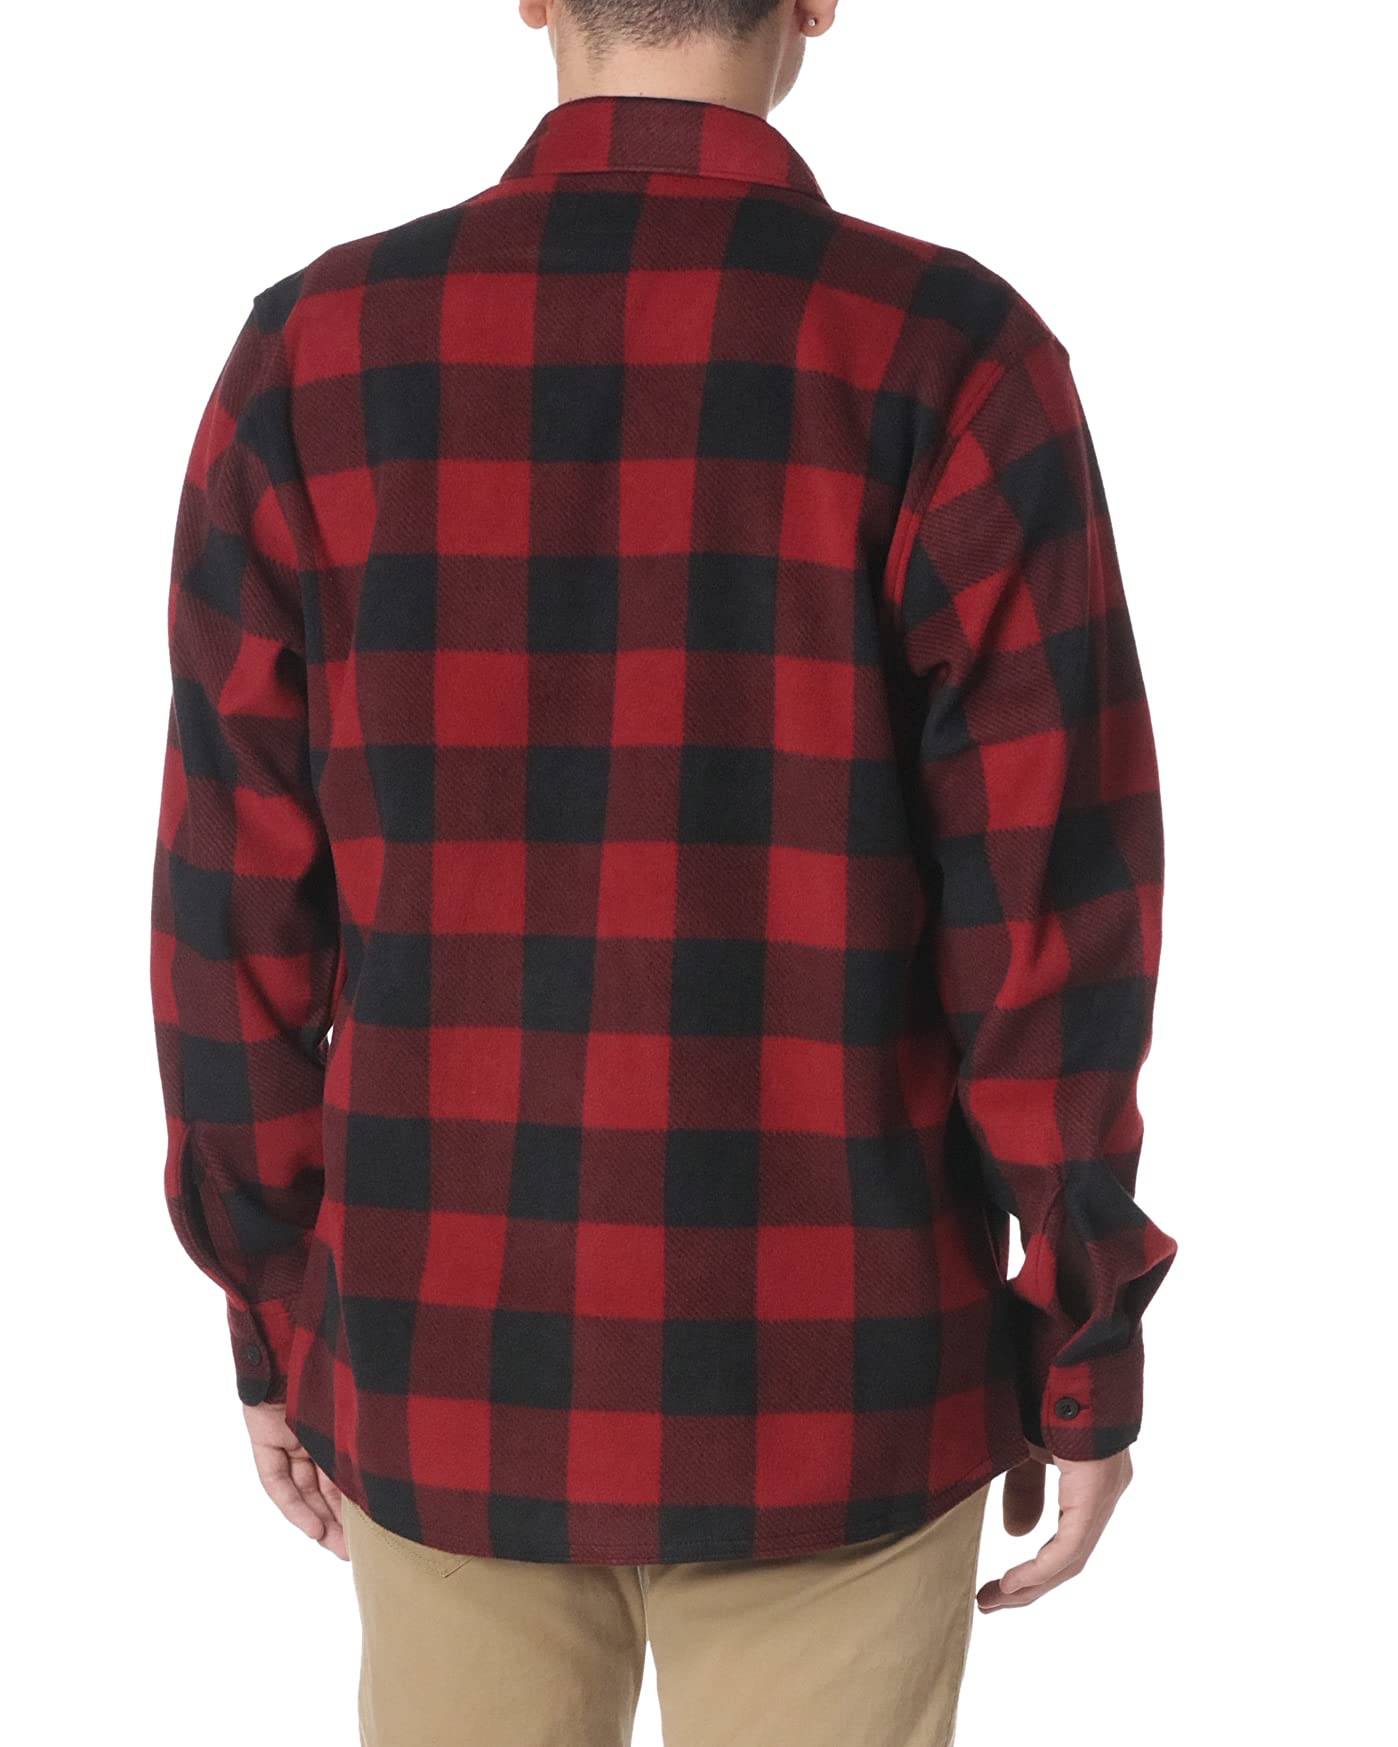 Wrangler Authentics Men's Long Sleeve Heavyweight Fleece Shirt, Red Buffalo Plaid, XX-Large